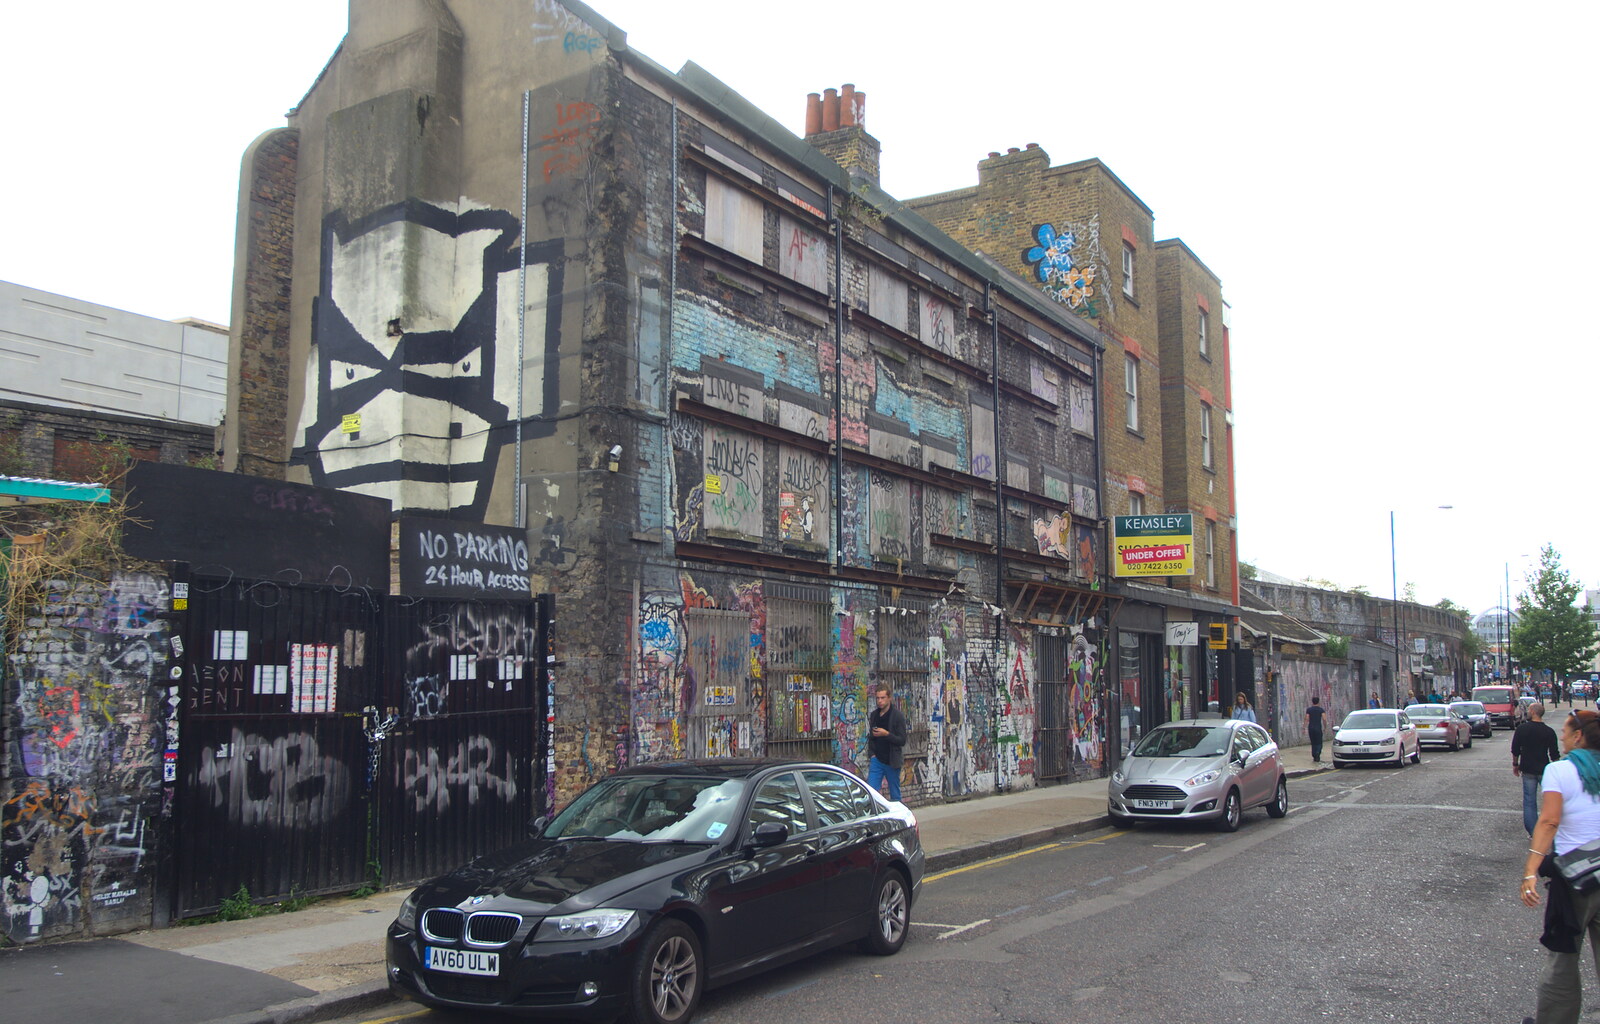 More dereliction on Quaker Street from Spitalfields and Brick Lane Street Art, Whitechapel, London - 10th August 2013